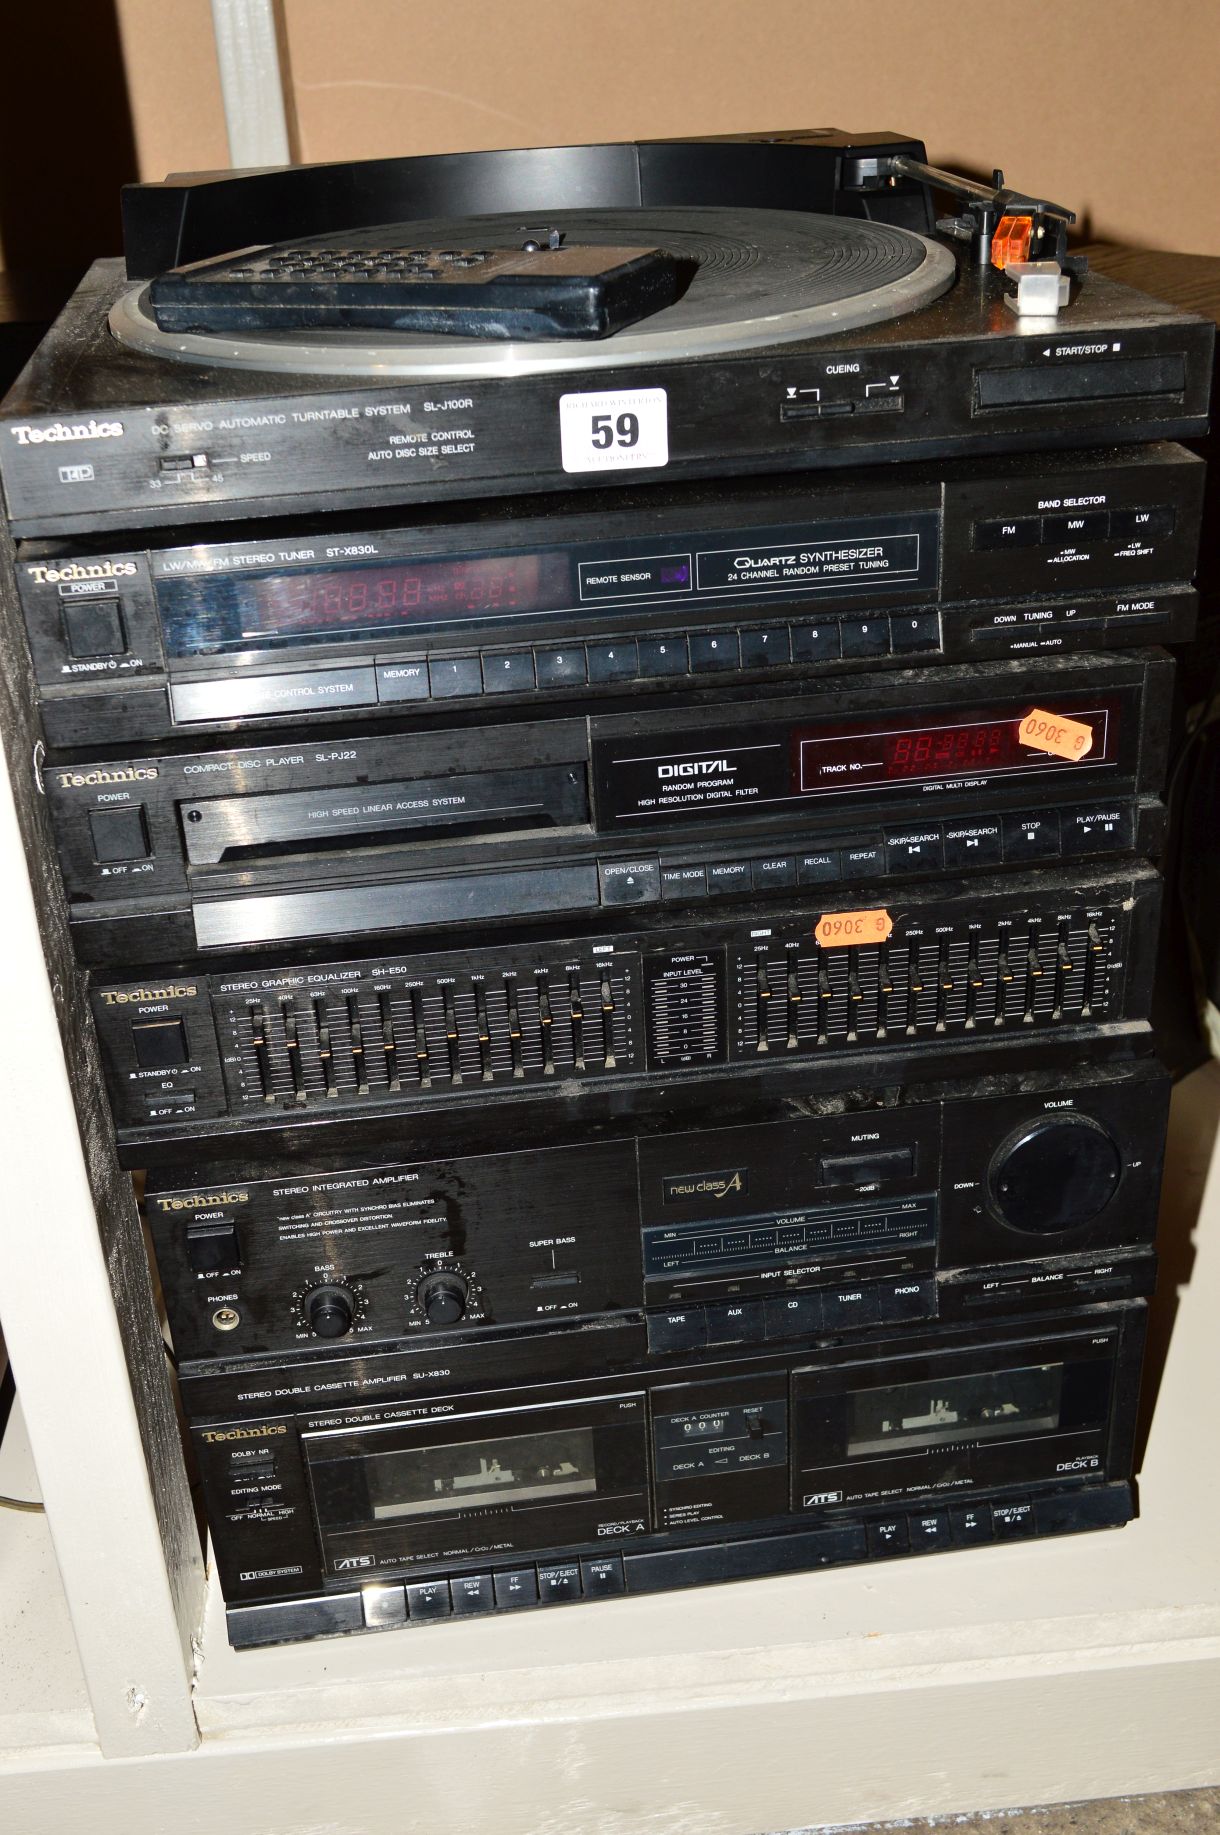 A TECHNICS COMPONENT HI-FI, including a SL-J100r Turntable, a ST-X830L Tuner, a SL-PJ22 CD Player, a